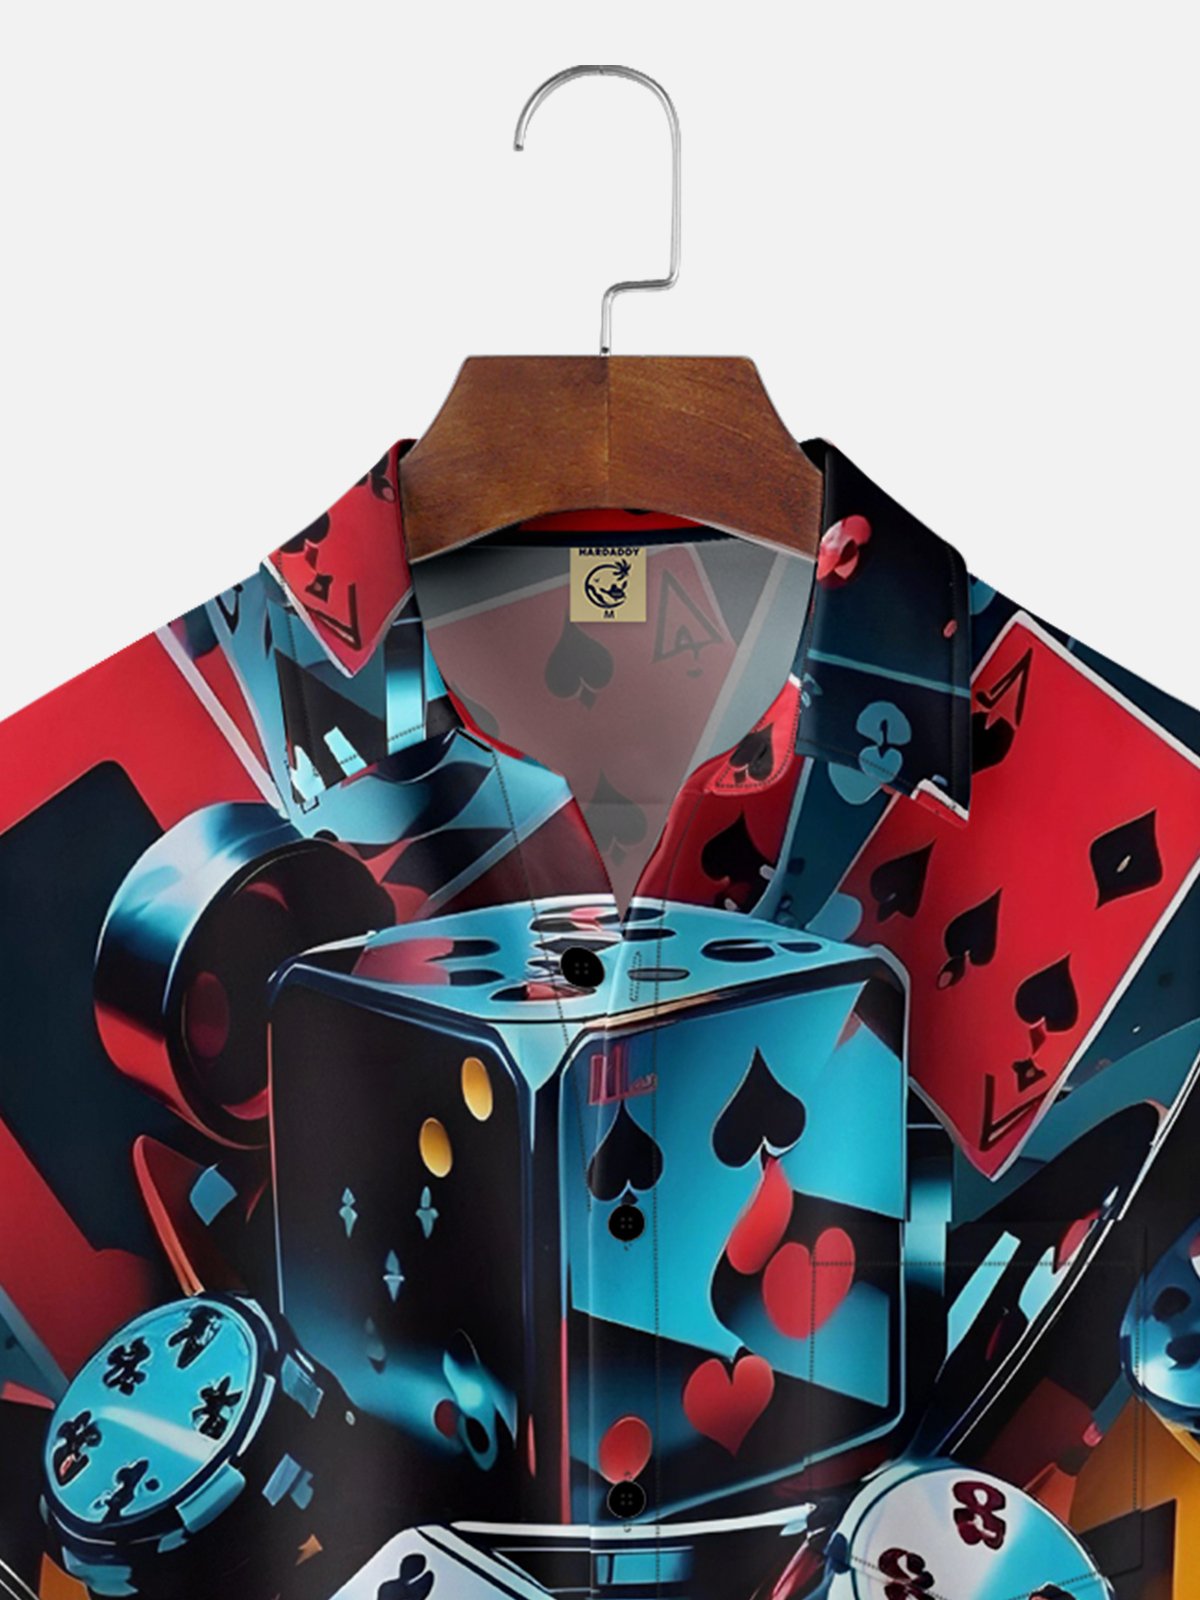 Hardaddy Moisture-wicking Dice Poker Chest Pocket Hawaiian Shirt